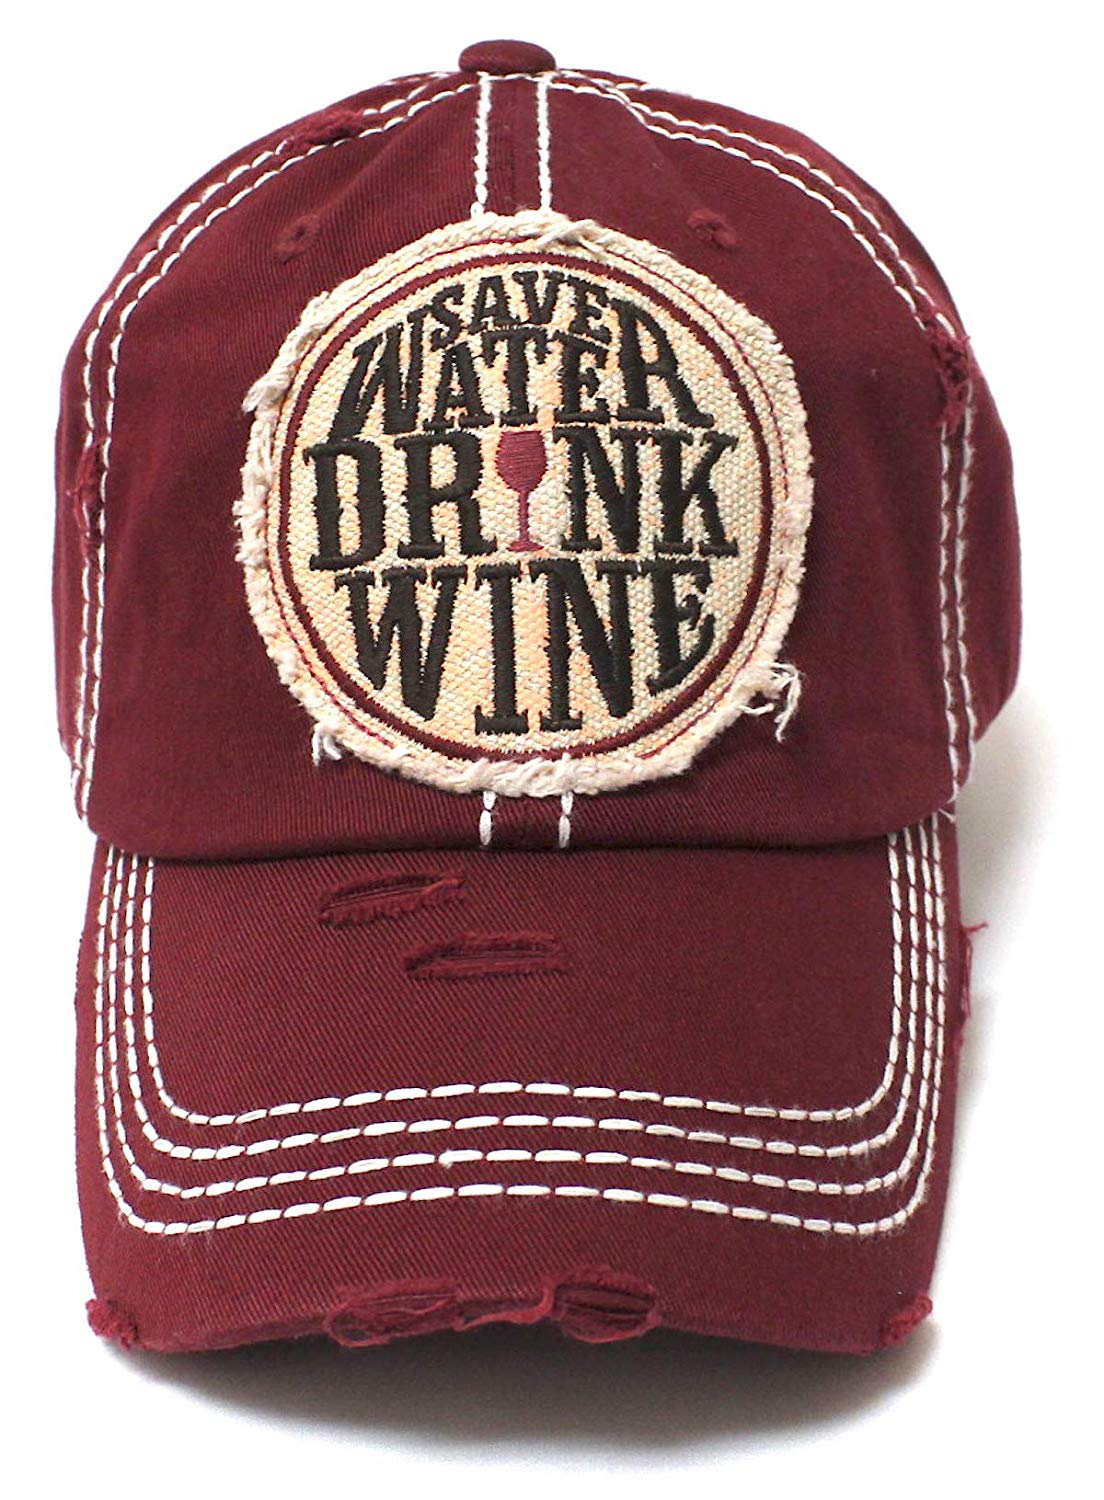 CAPS 'N VINTAGE Women's Patch Embroidery Baseball Cap Save Water Drink Wine - Caps 'N Vintage 